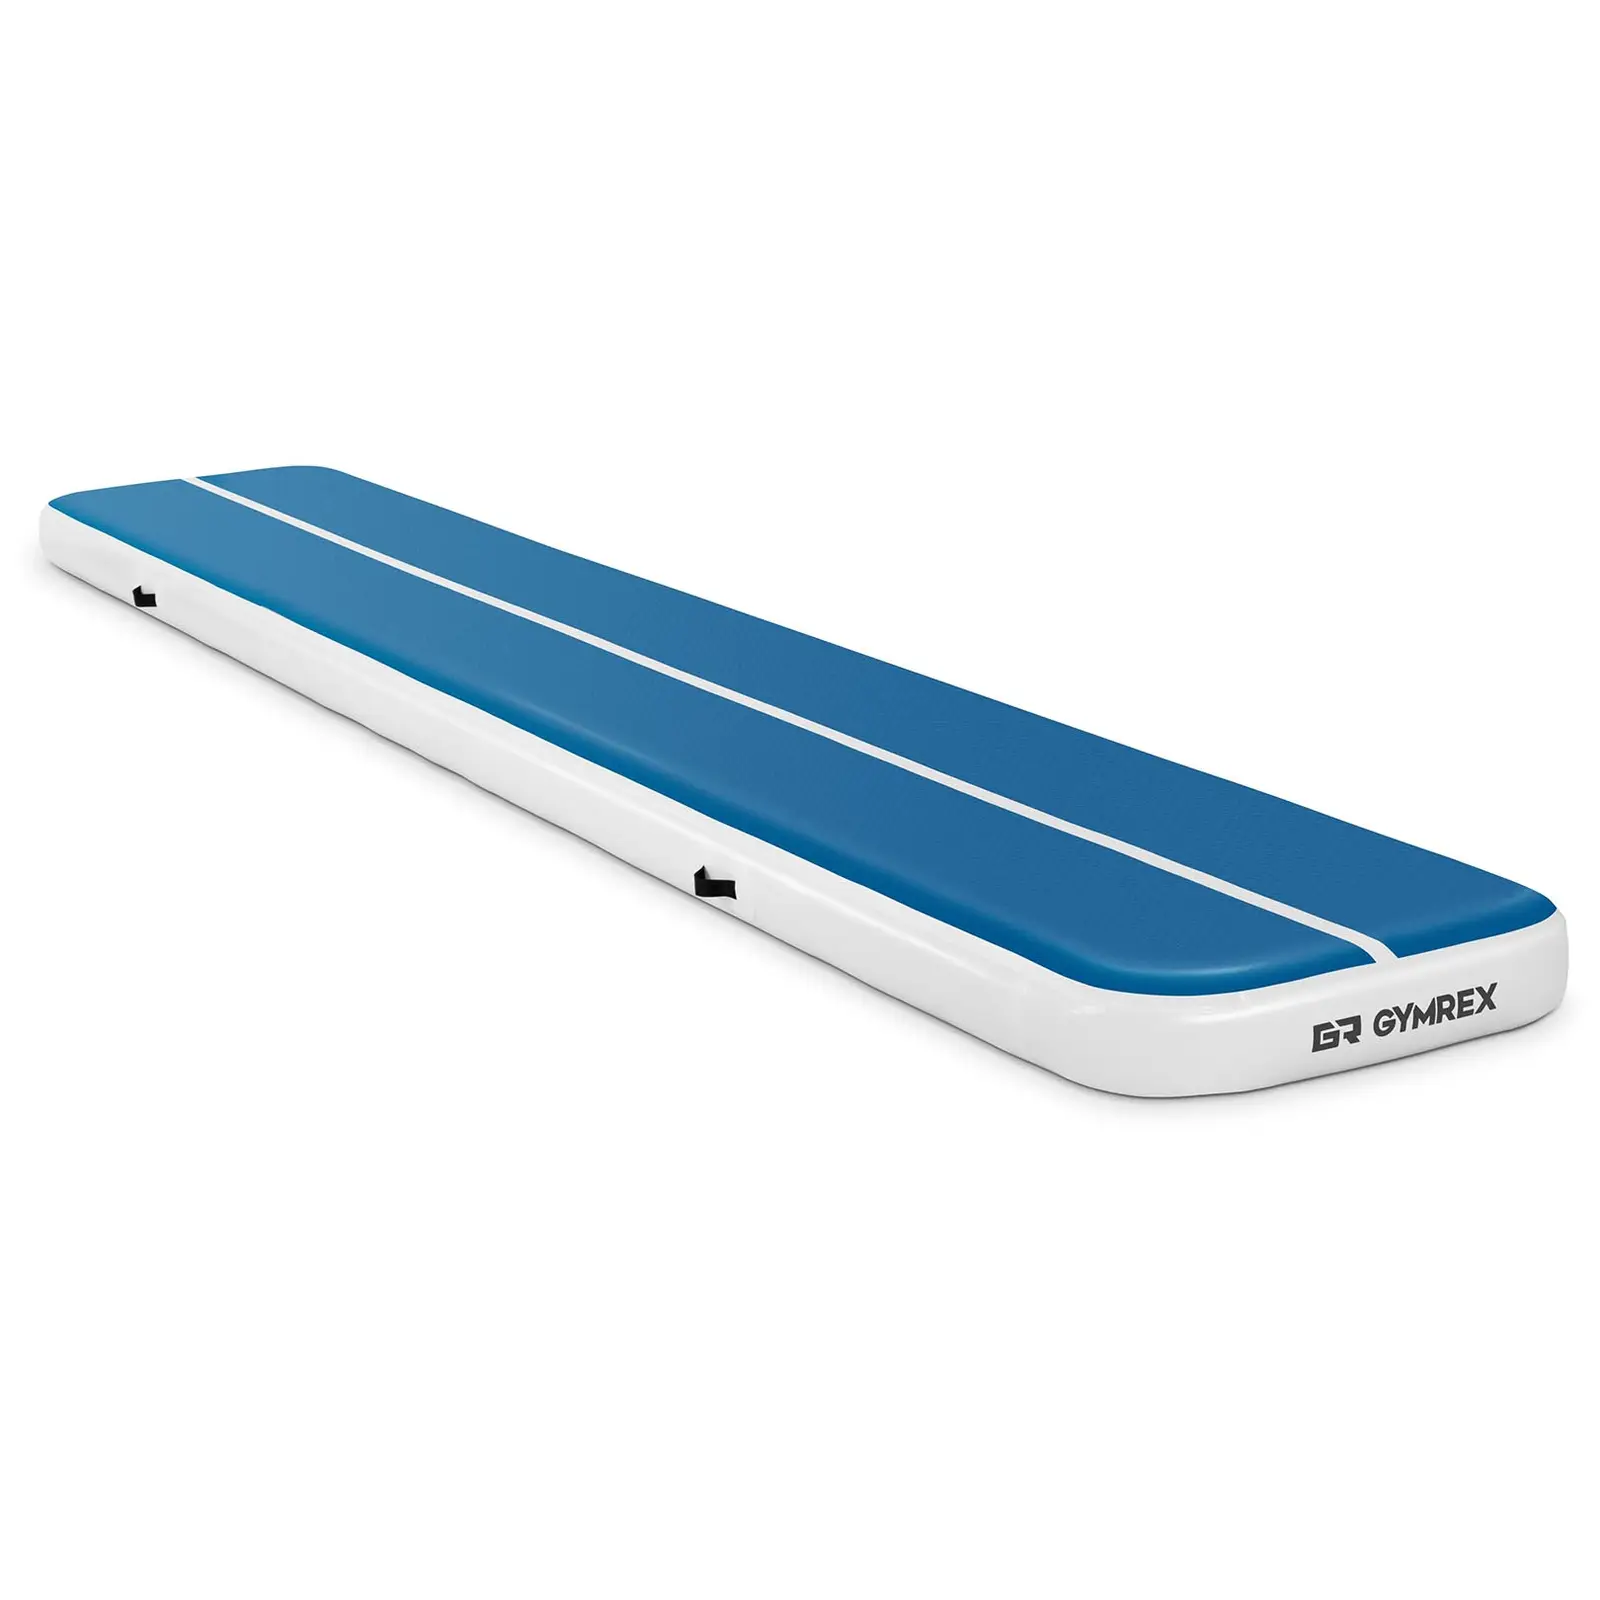 Uppblåsbar gymnastikmatta - 600 x 100 x 20 cm - blå och vit